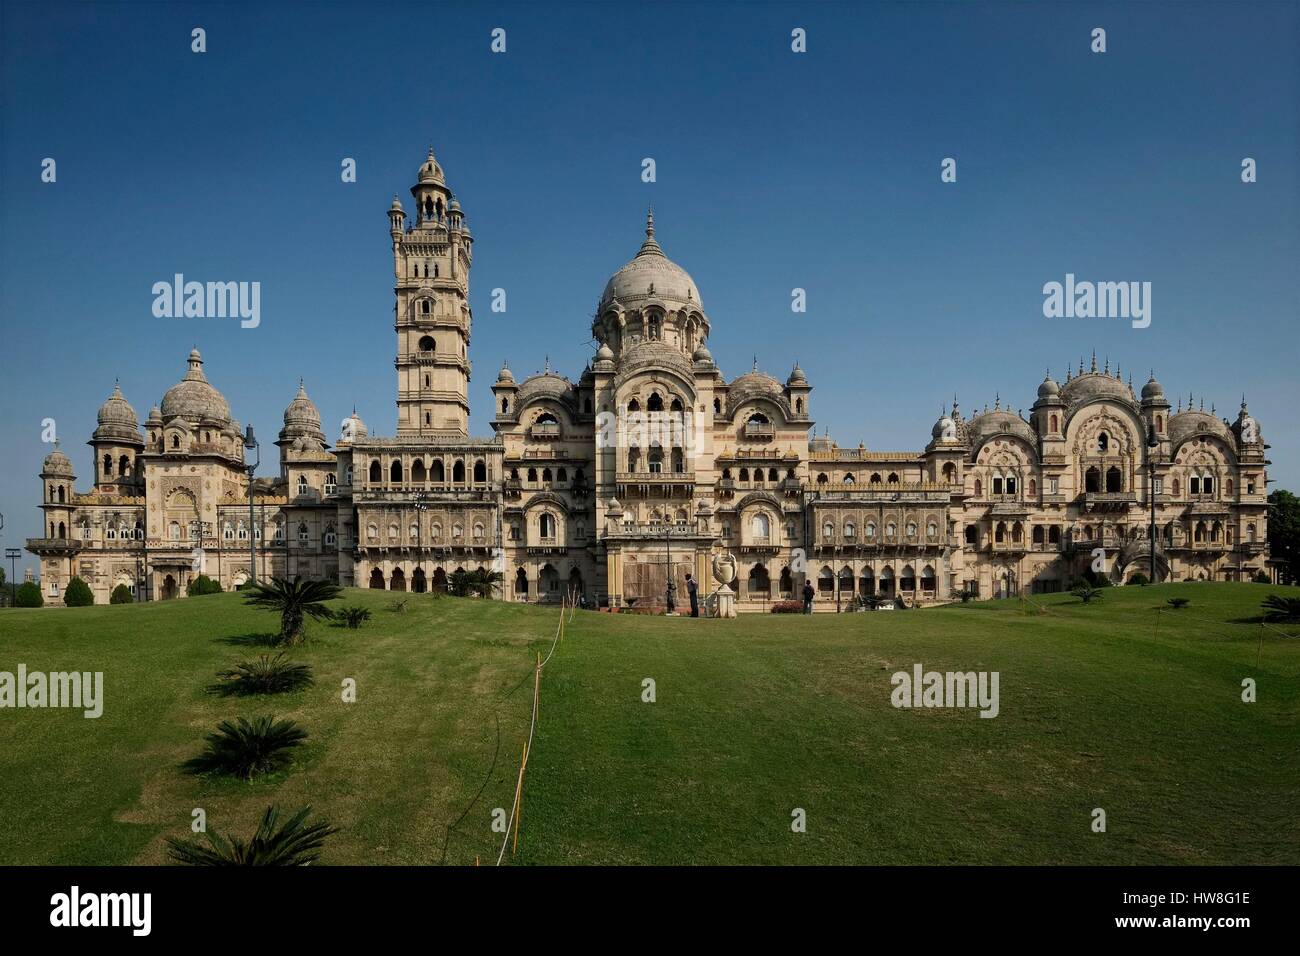 India, Gujarat State, Baroda or Vadodara, Lakshmi Vilas Palace, Indo-Saracenic Revival architecture Palace, built by the Maharajah Sayajirao Gaekwad III in 1890 Stock Photo